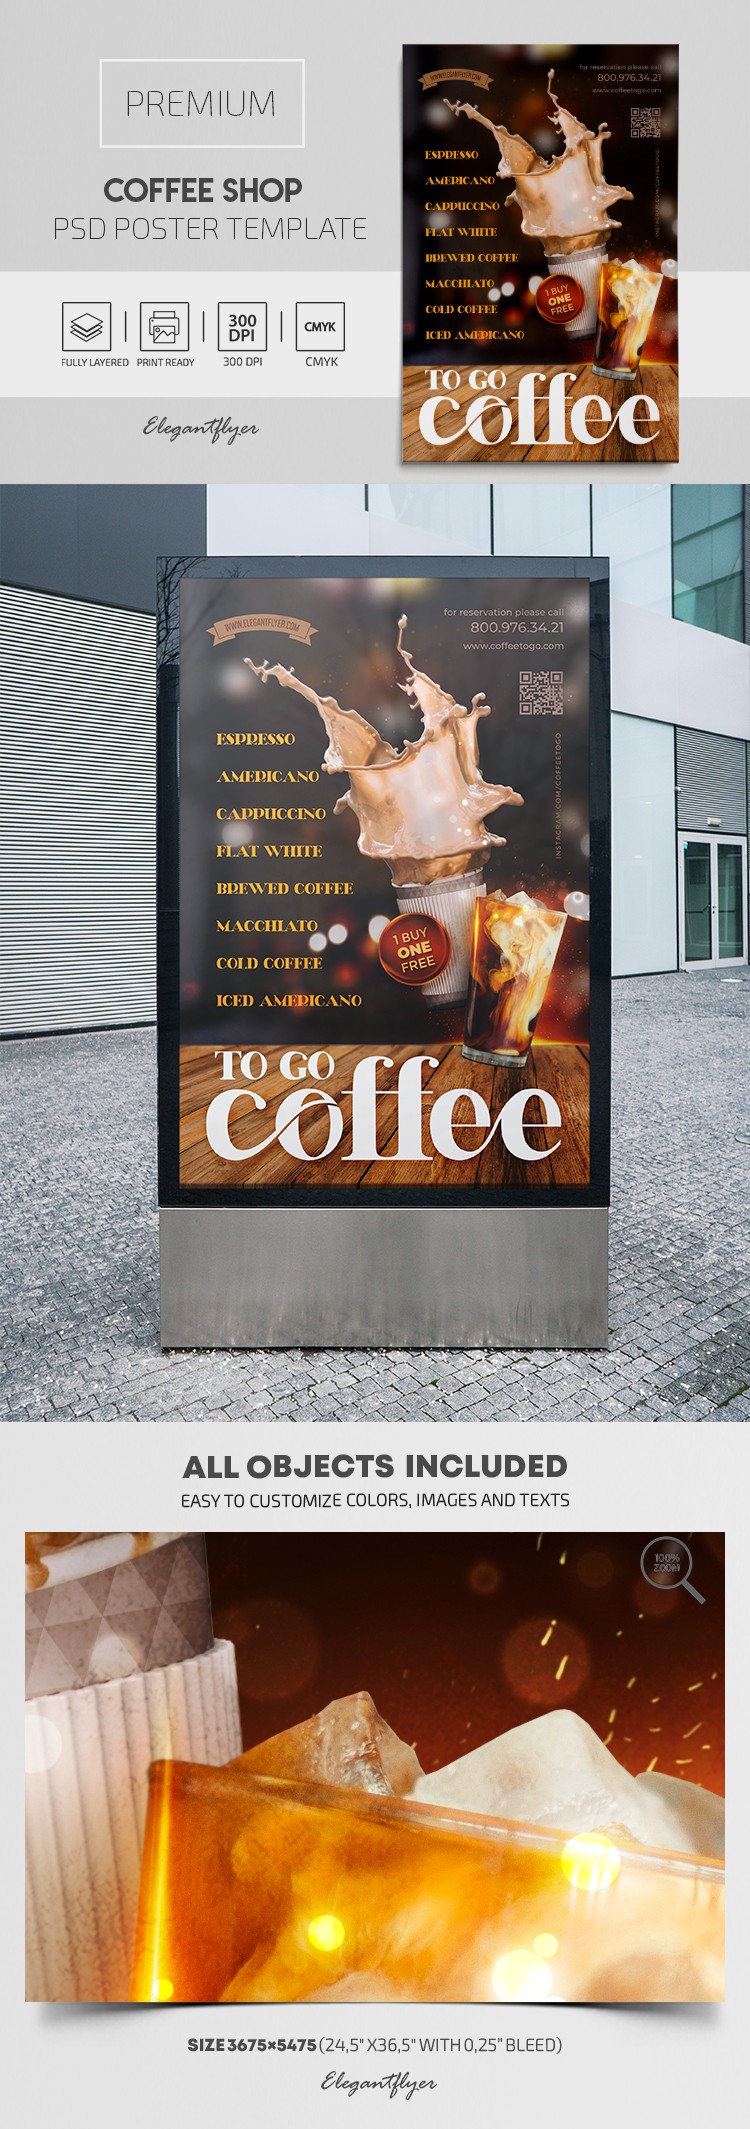 Coffee Shop Poster by ElegantFlyer